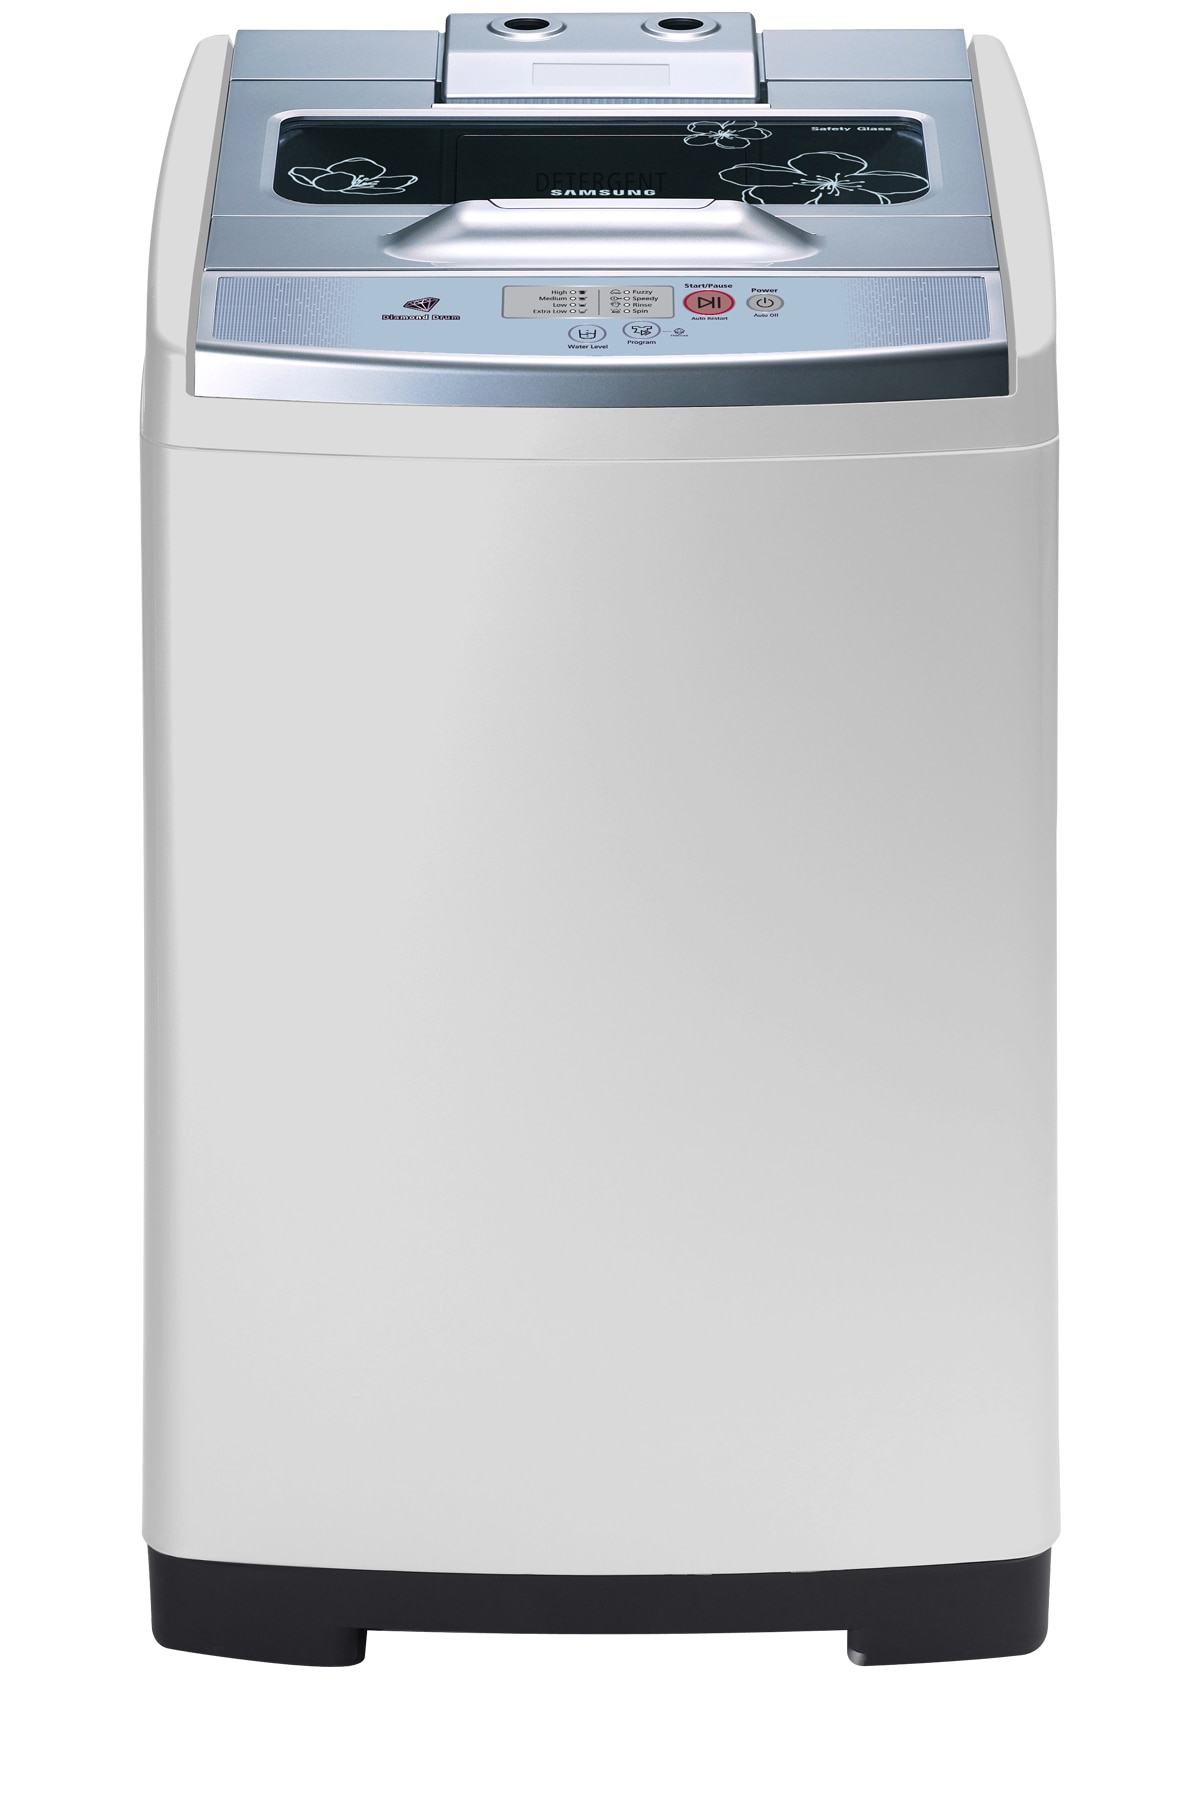 Samsung Top Loading Washing Machine 6 kg WA80E5LEC/TL | Samsung India